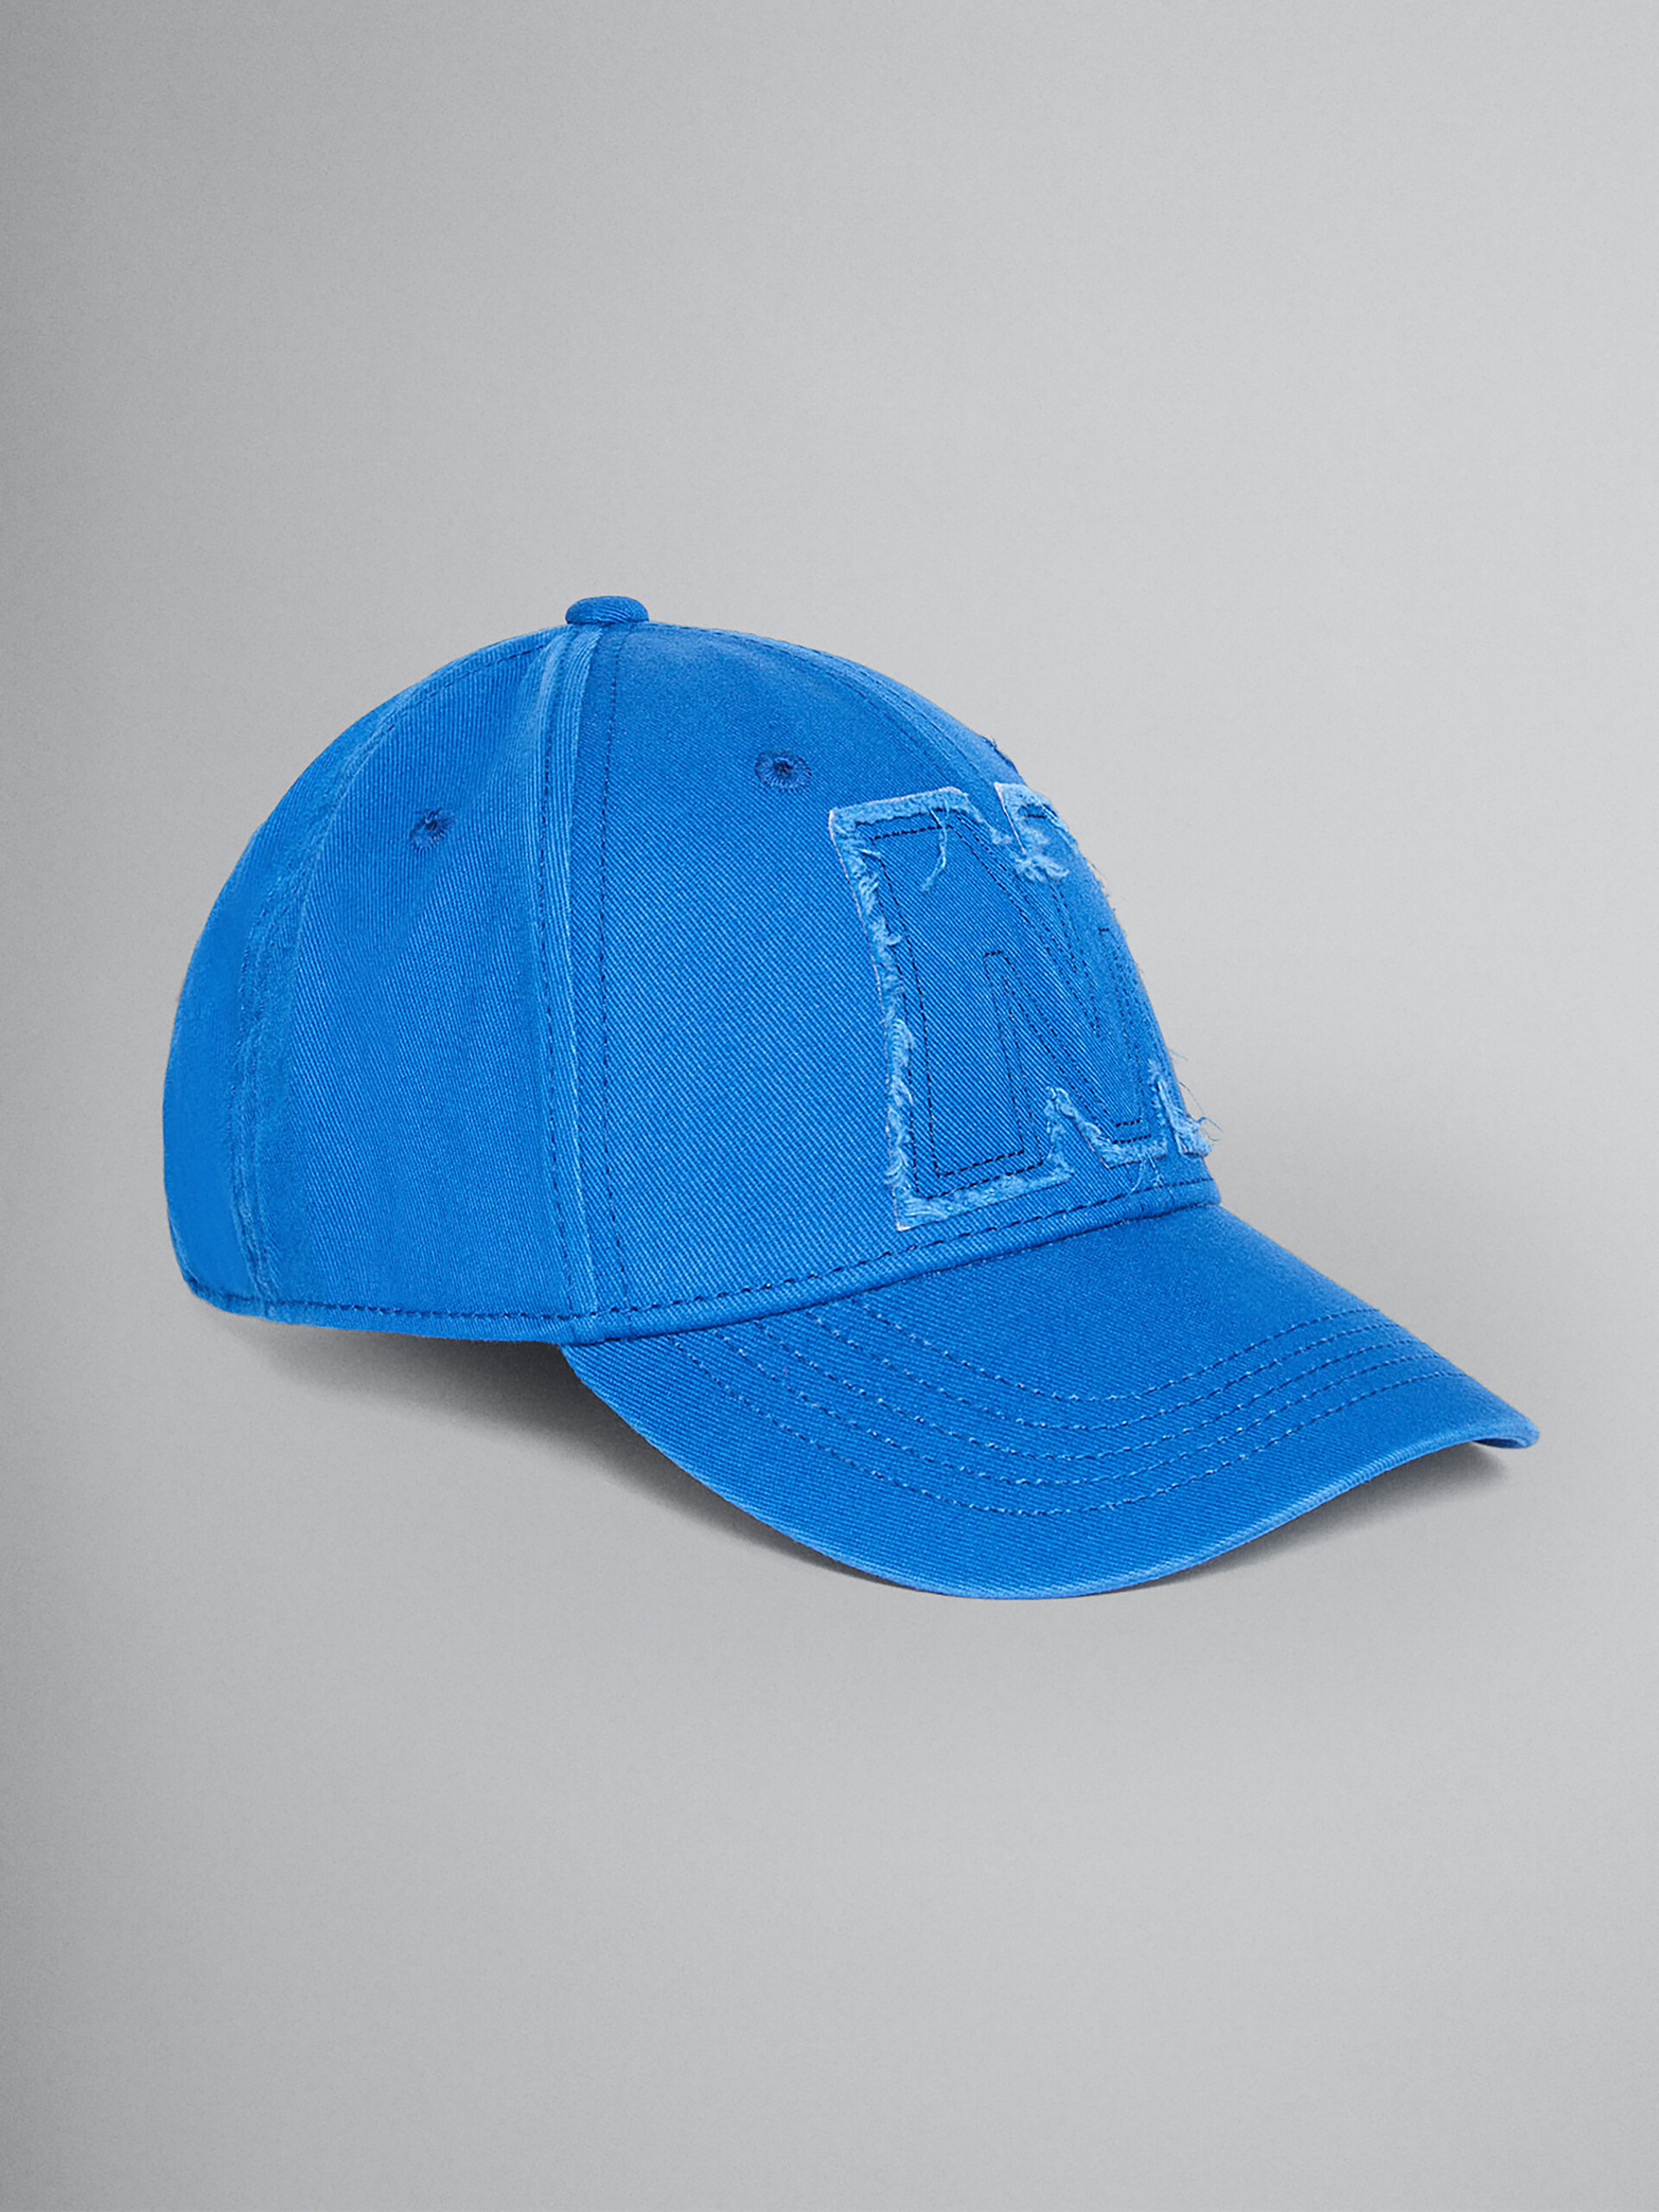 Blue baseball cap with Big M logo - Caps - Image 1